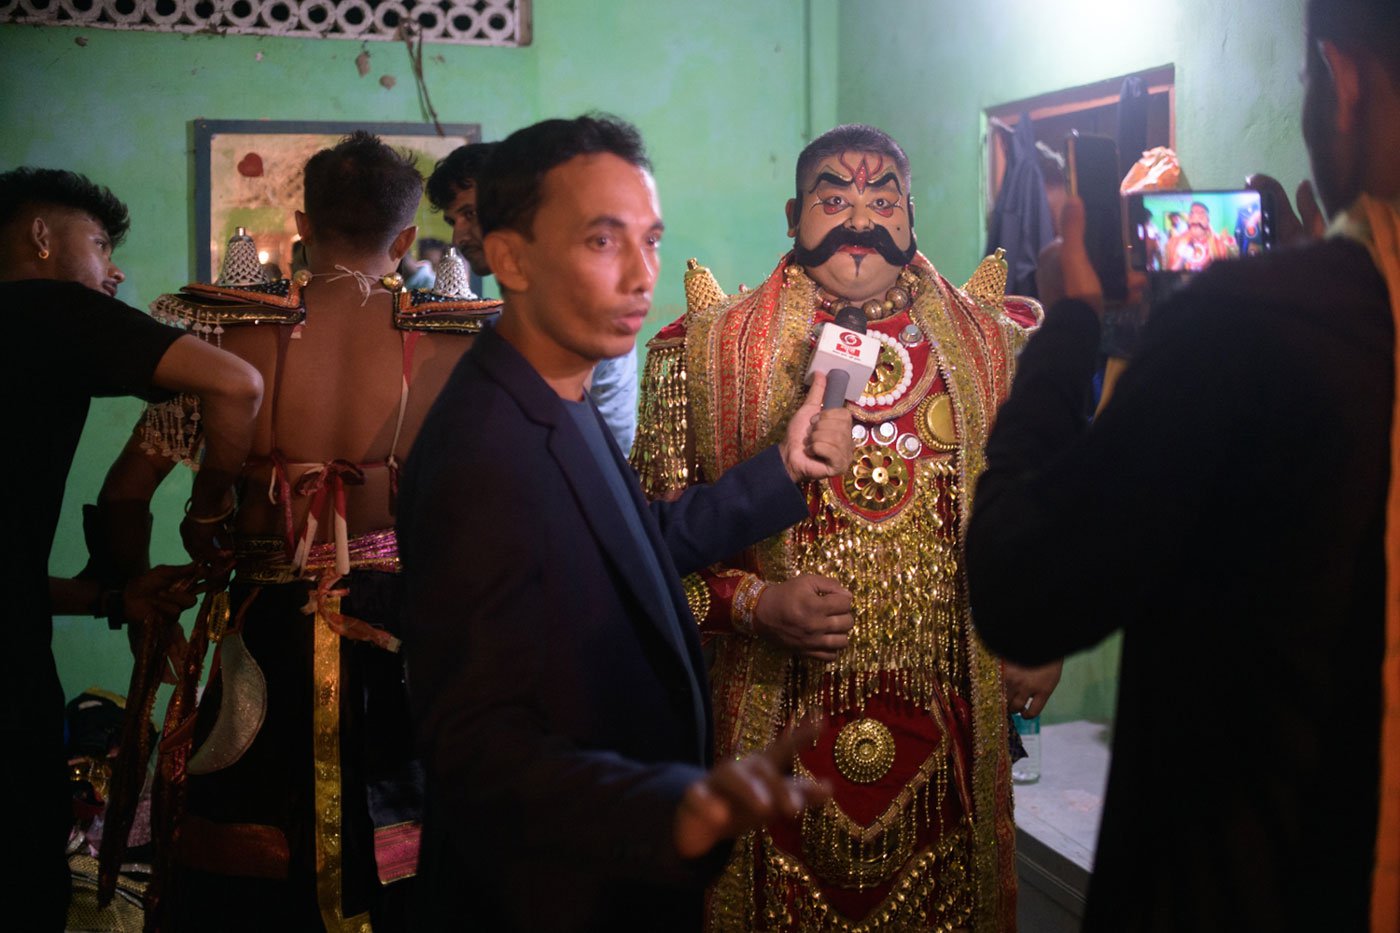 Reporters interviewing Mridupawan Bhuyan, who plays the role of Kansa, at the Garamur Saru Satra's festival